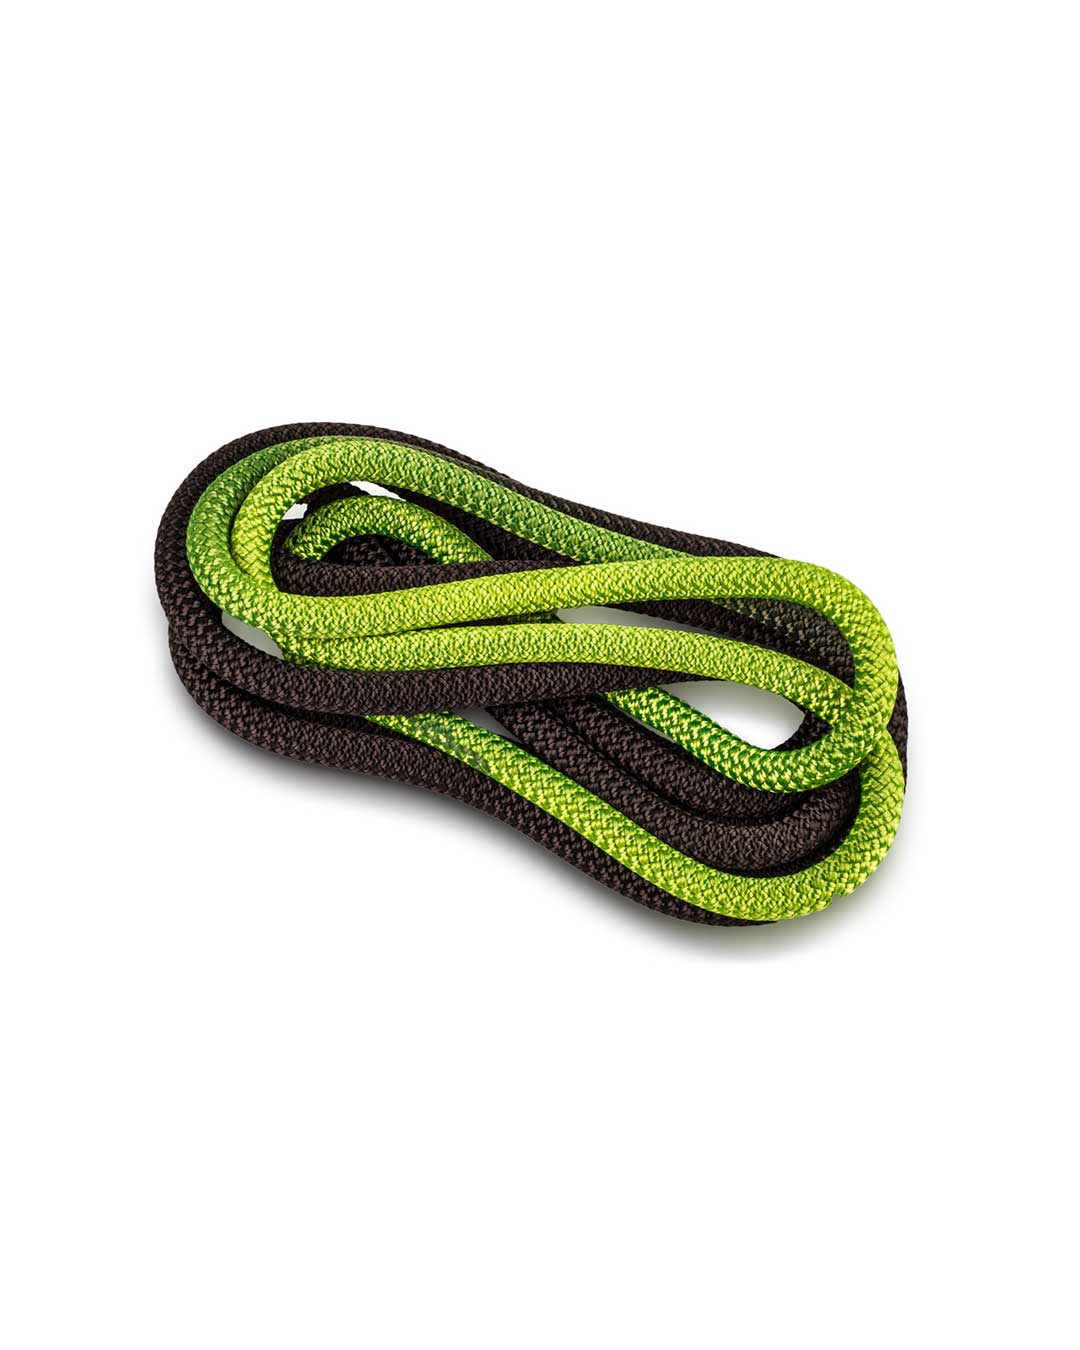 Cuerda de gimnasia rítmica VENTURELLI (Certificada FIG) verde negro - 3 m 